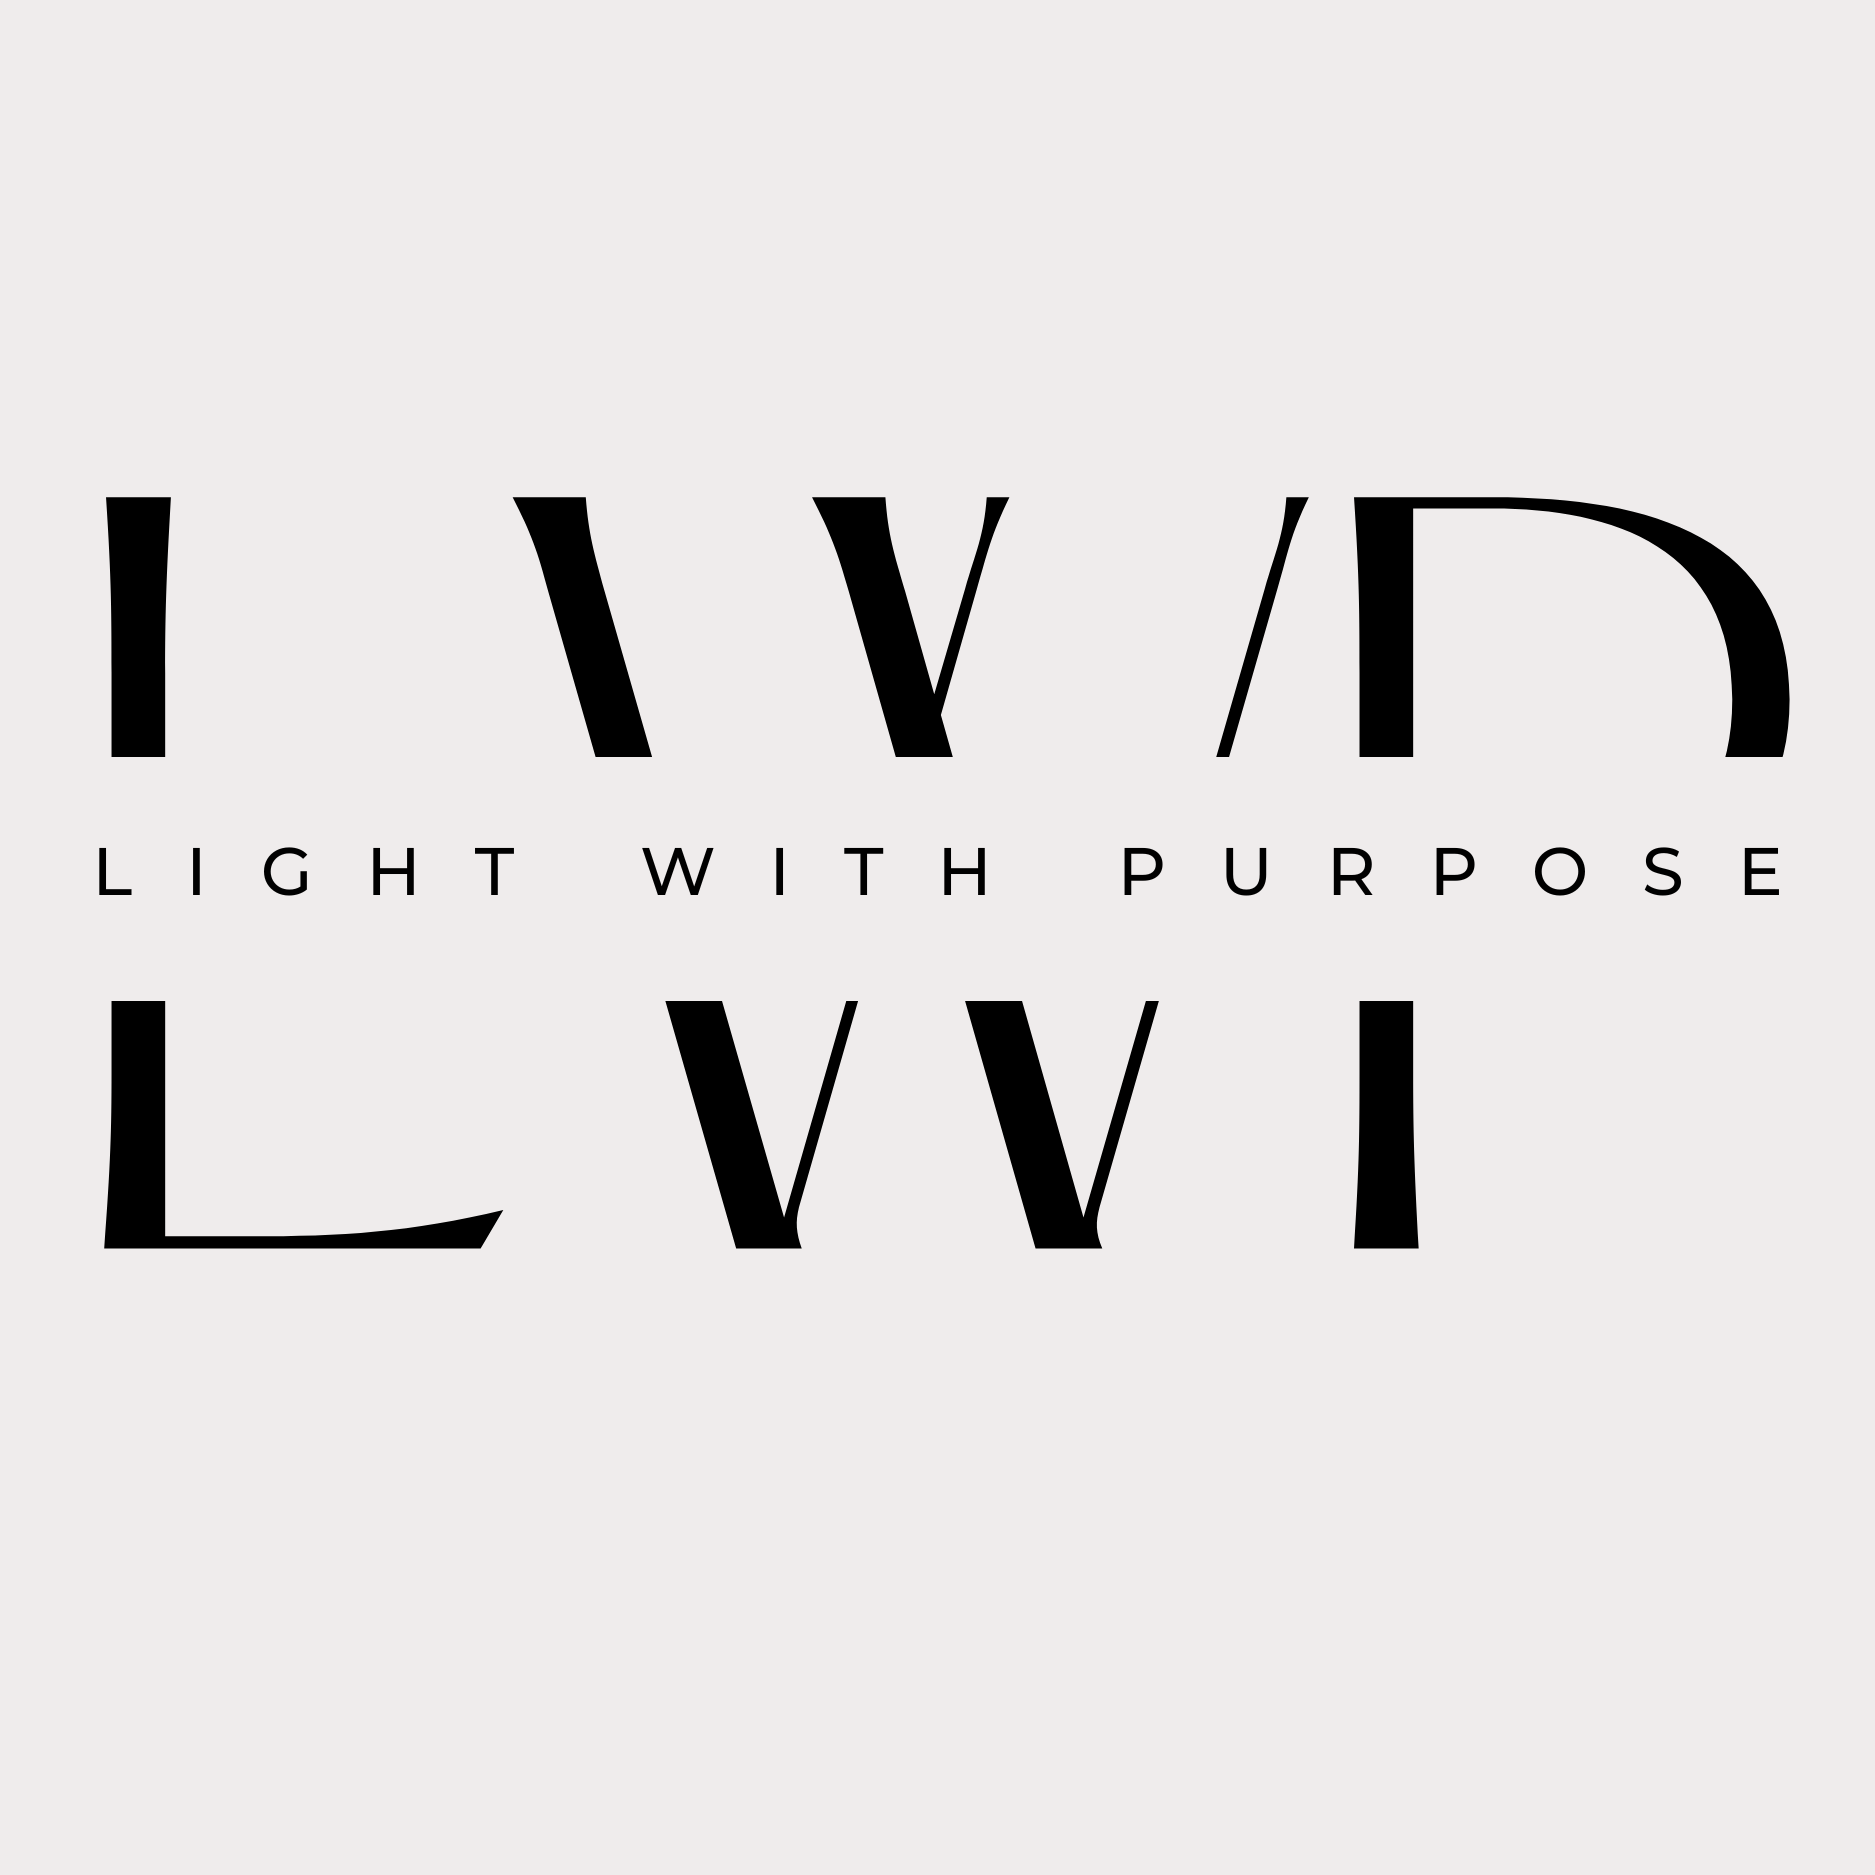 LightWithPurpose